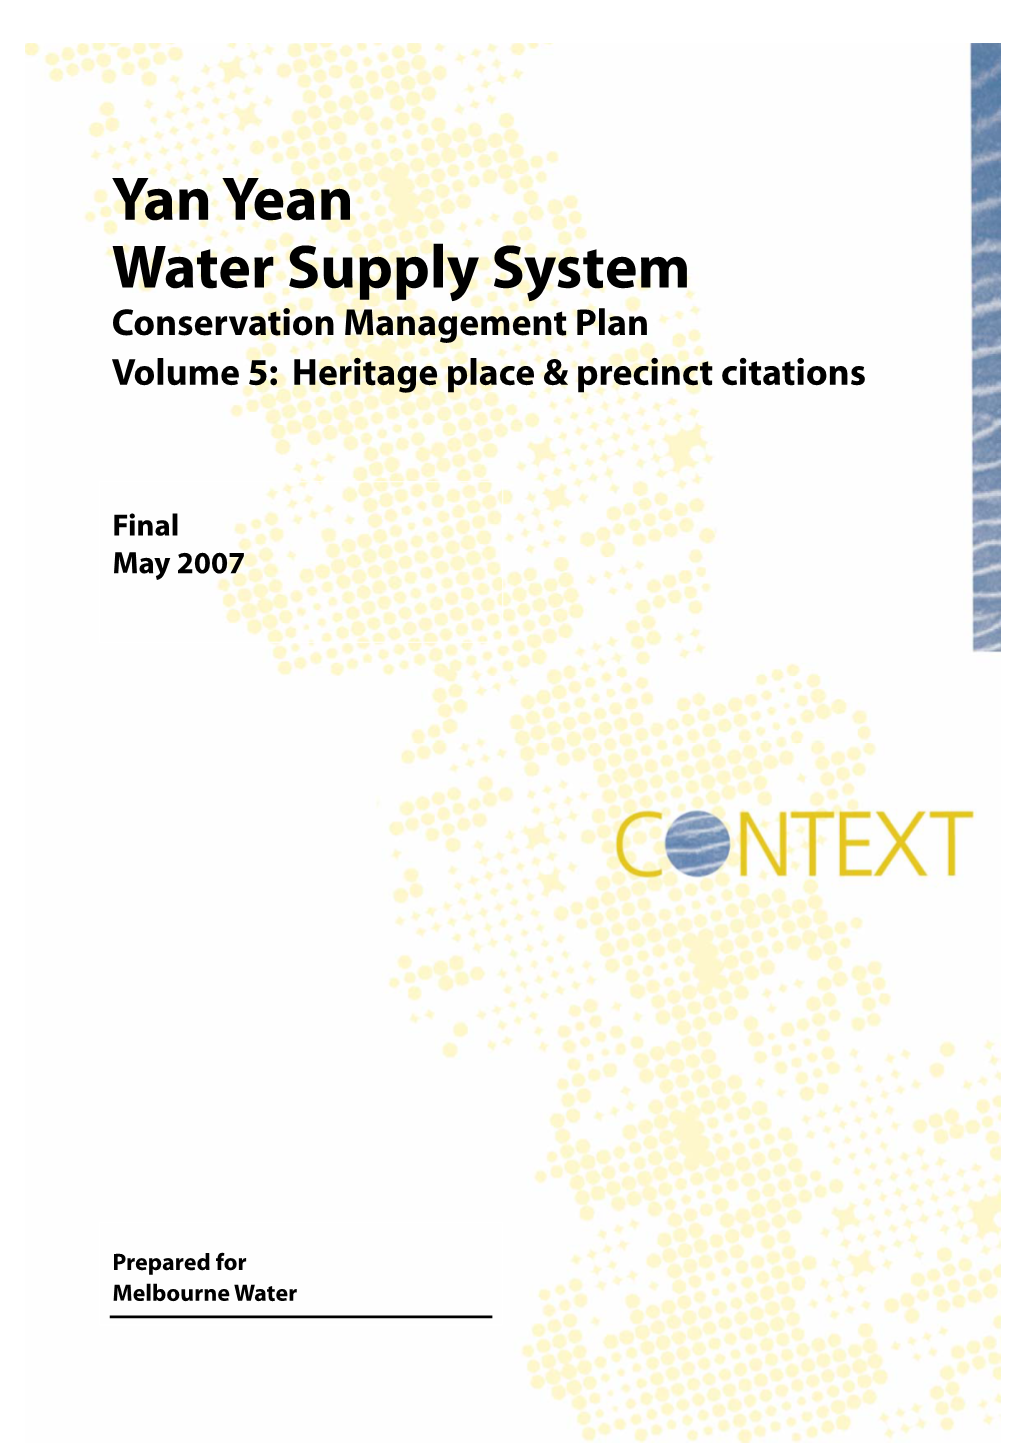 Yan Yean Water Supply System Conservation Management Plan Volume 5: Heritage Place & Precinct Citations